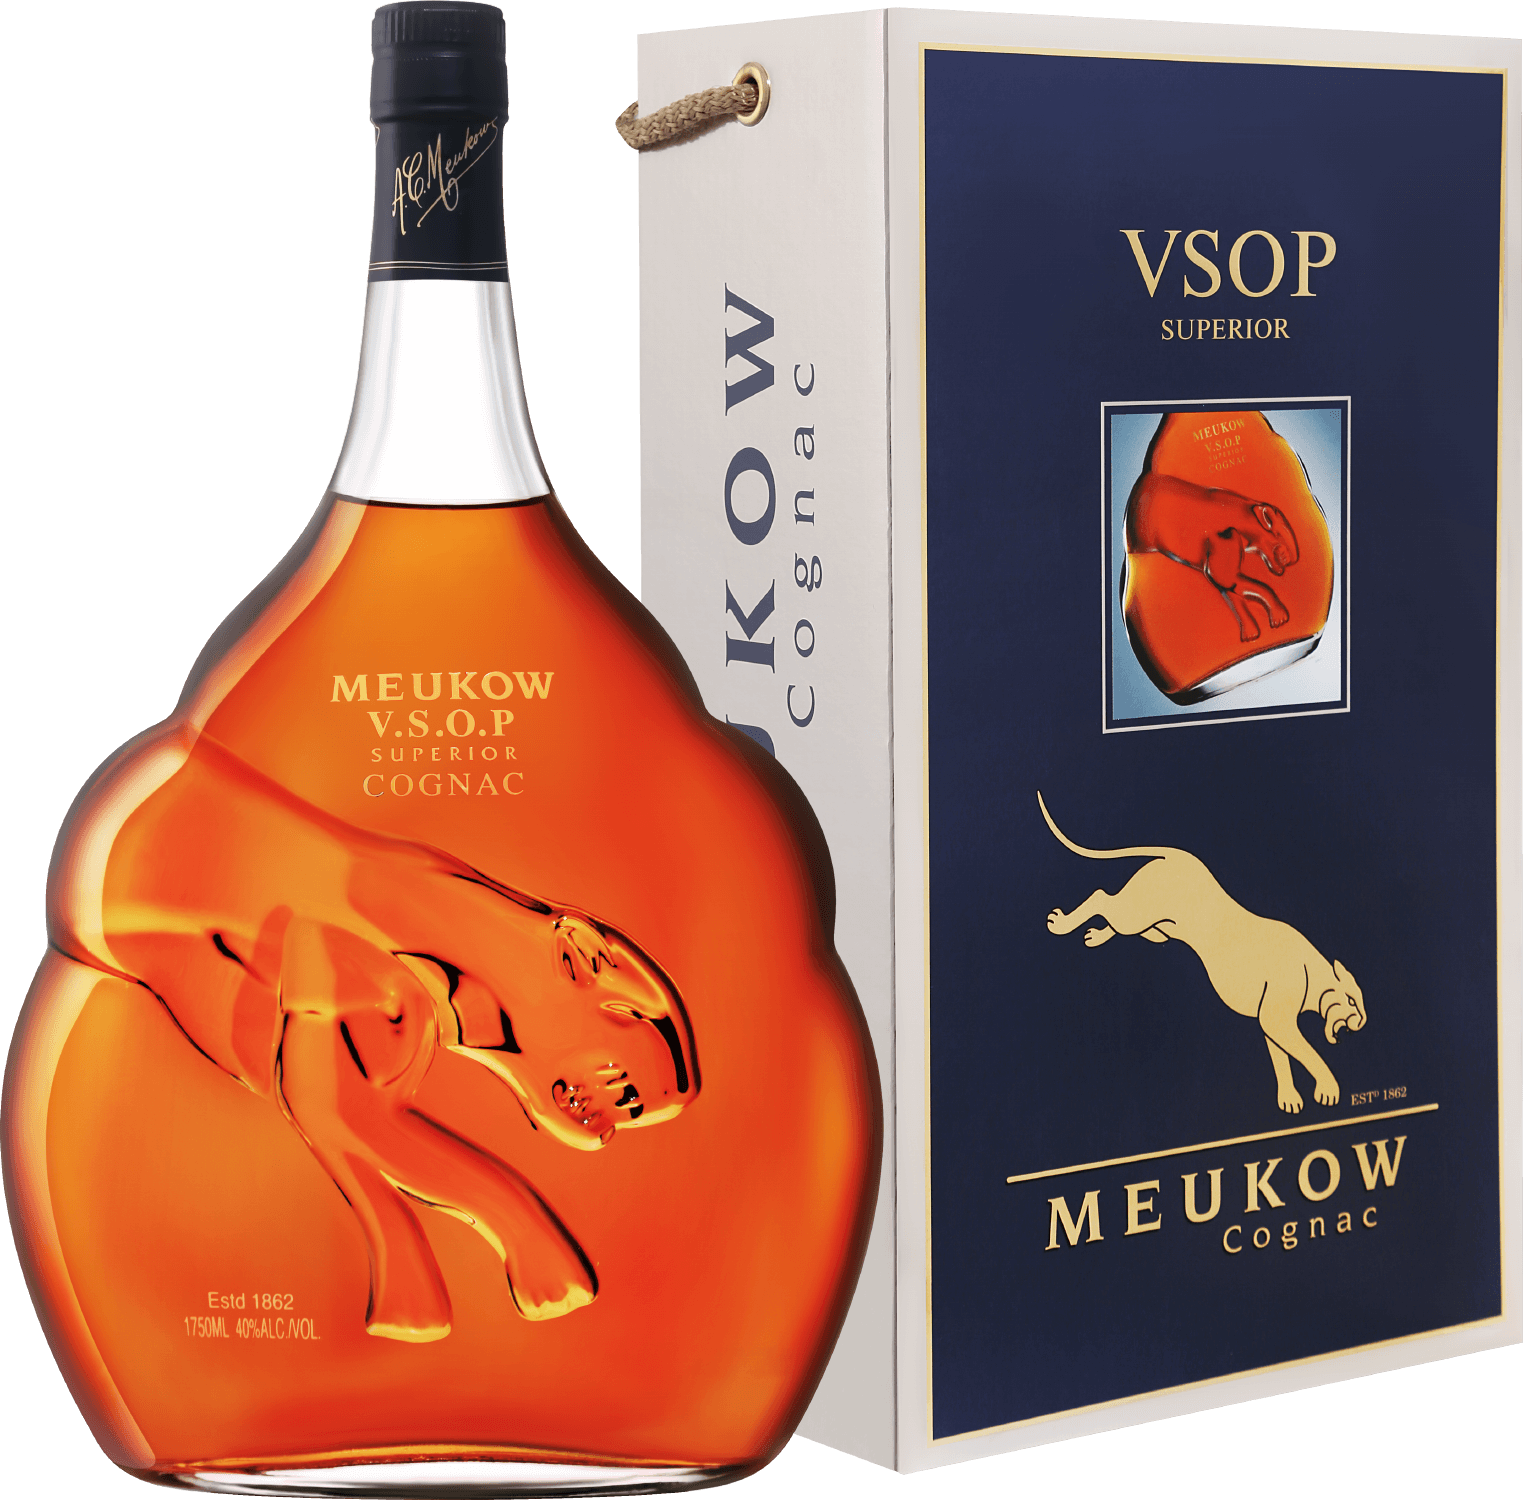 Meukow Cognac VSOP Superior (gift box) meukow cognac xo gift box